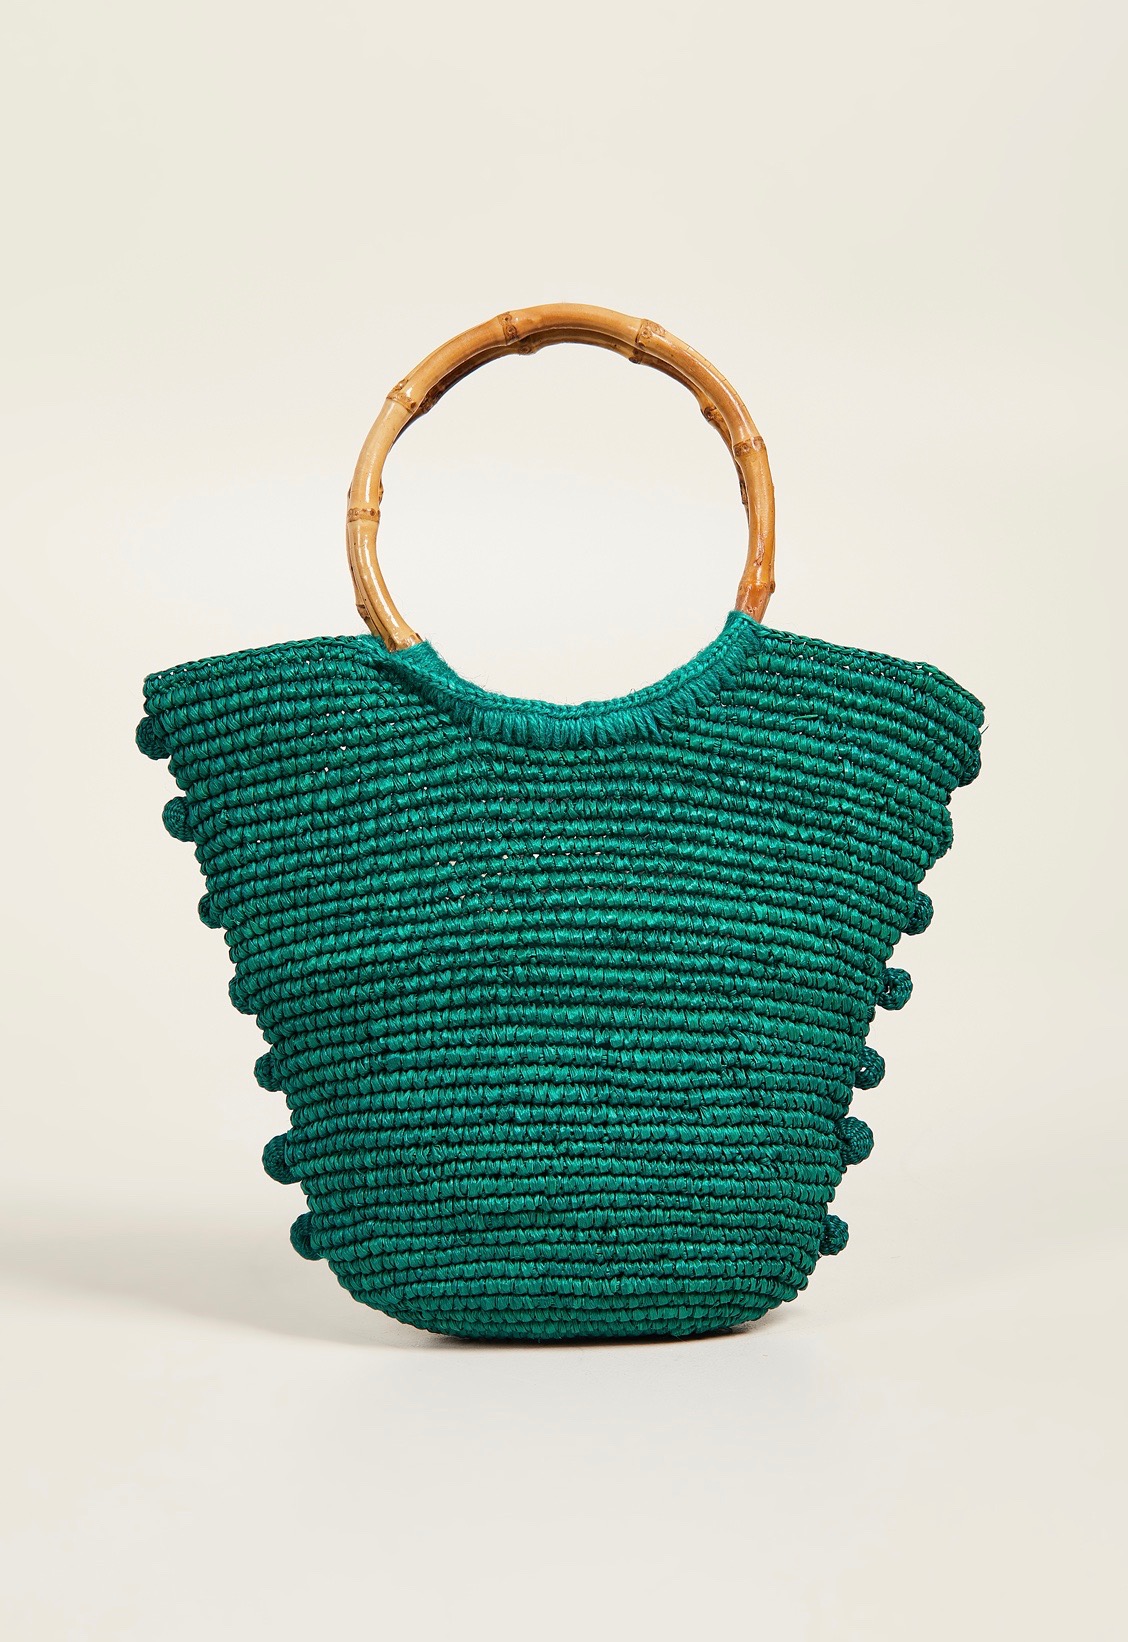 Bamboo handle Woven Green Tote Bag